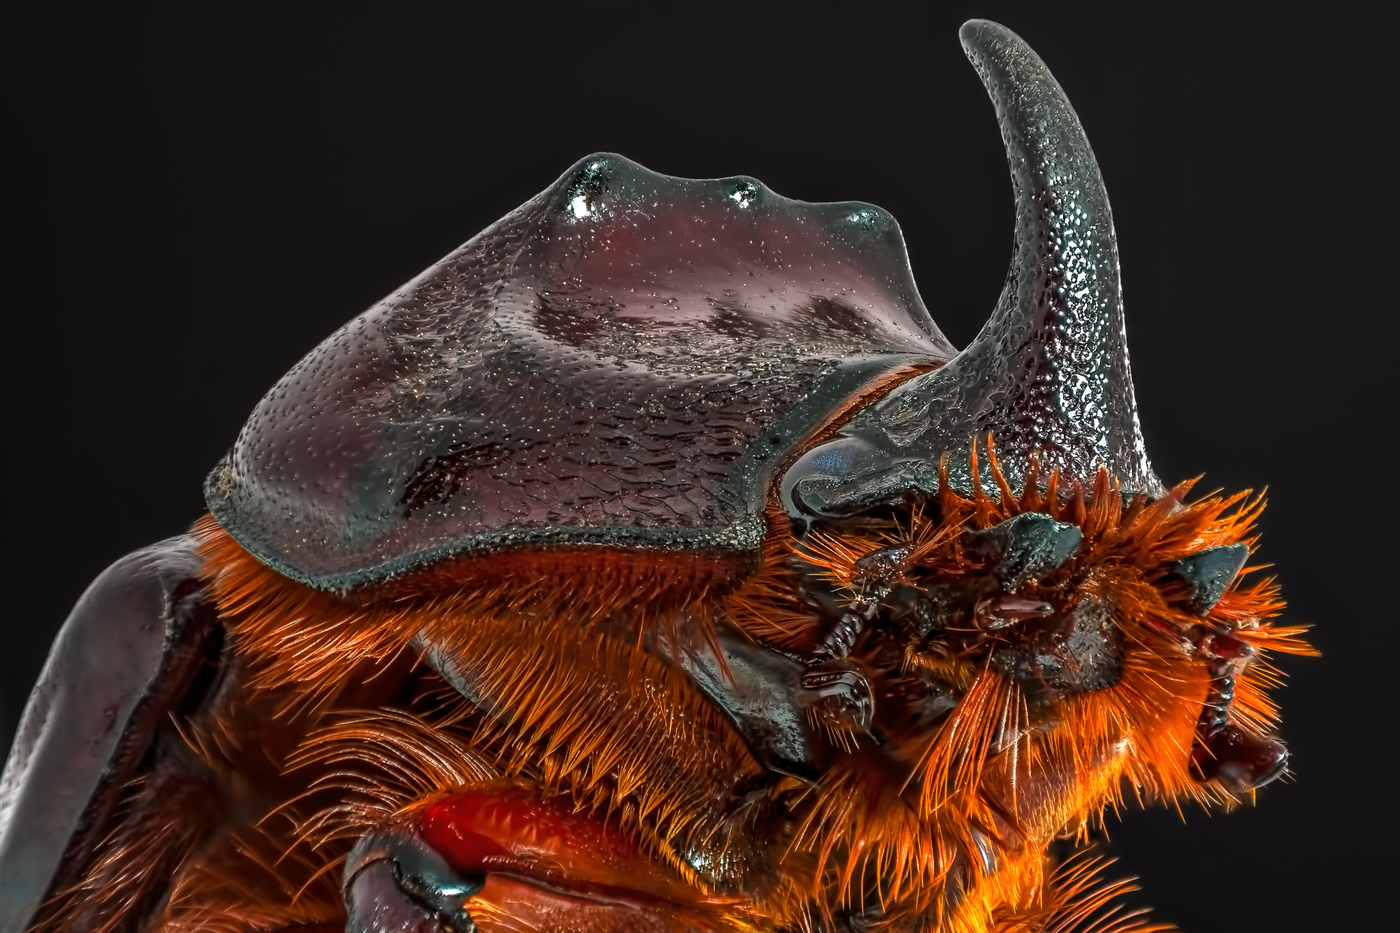 Rhinoceros beetle close-up: macro photo of rhinoceros beetle